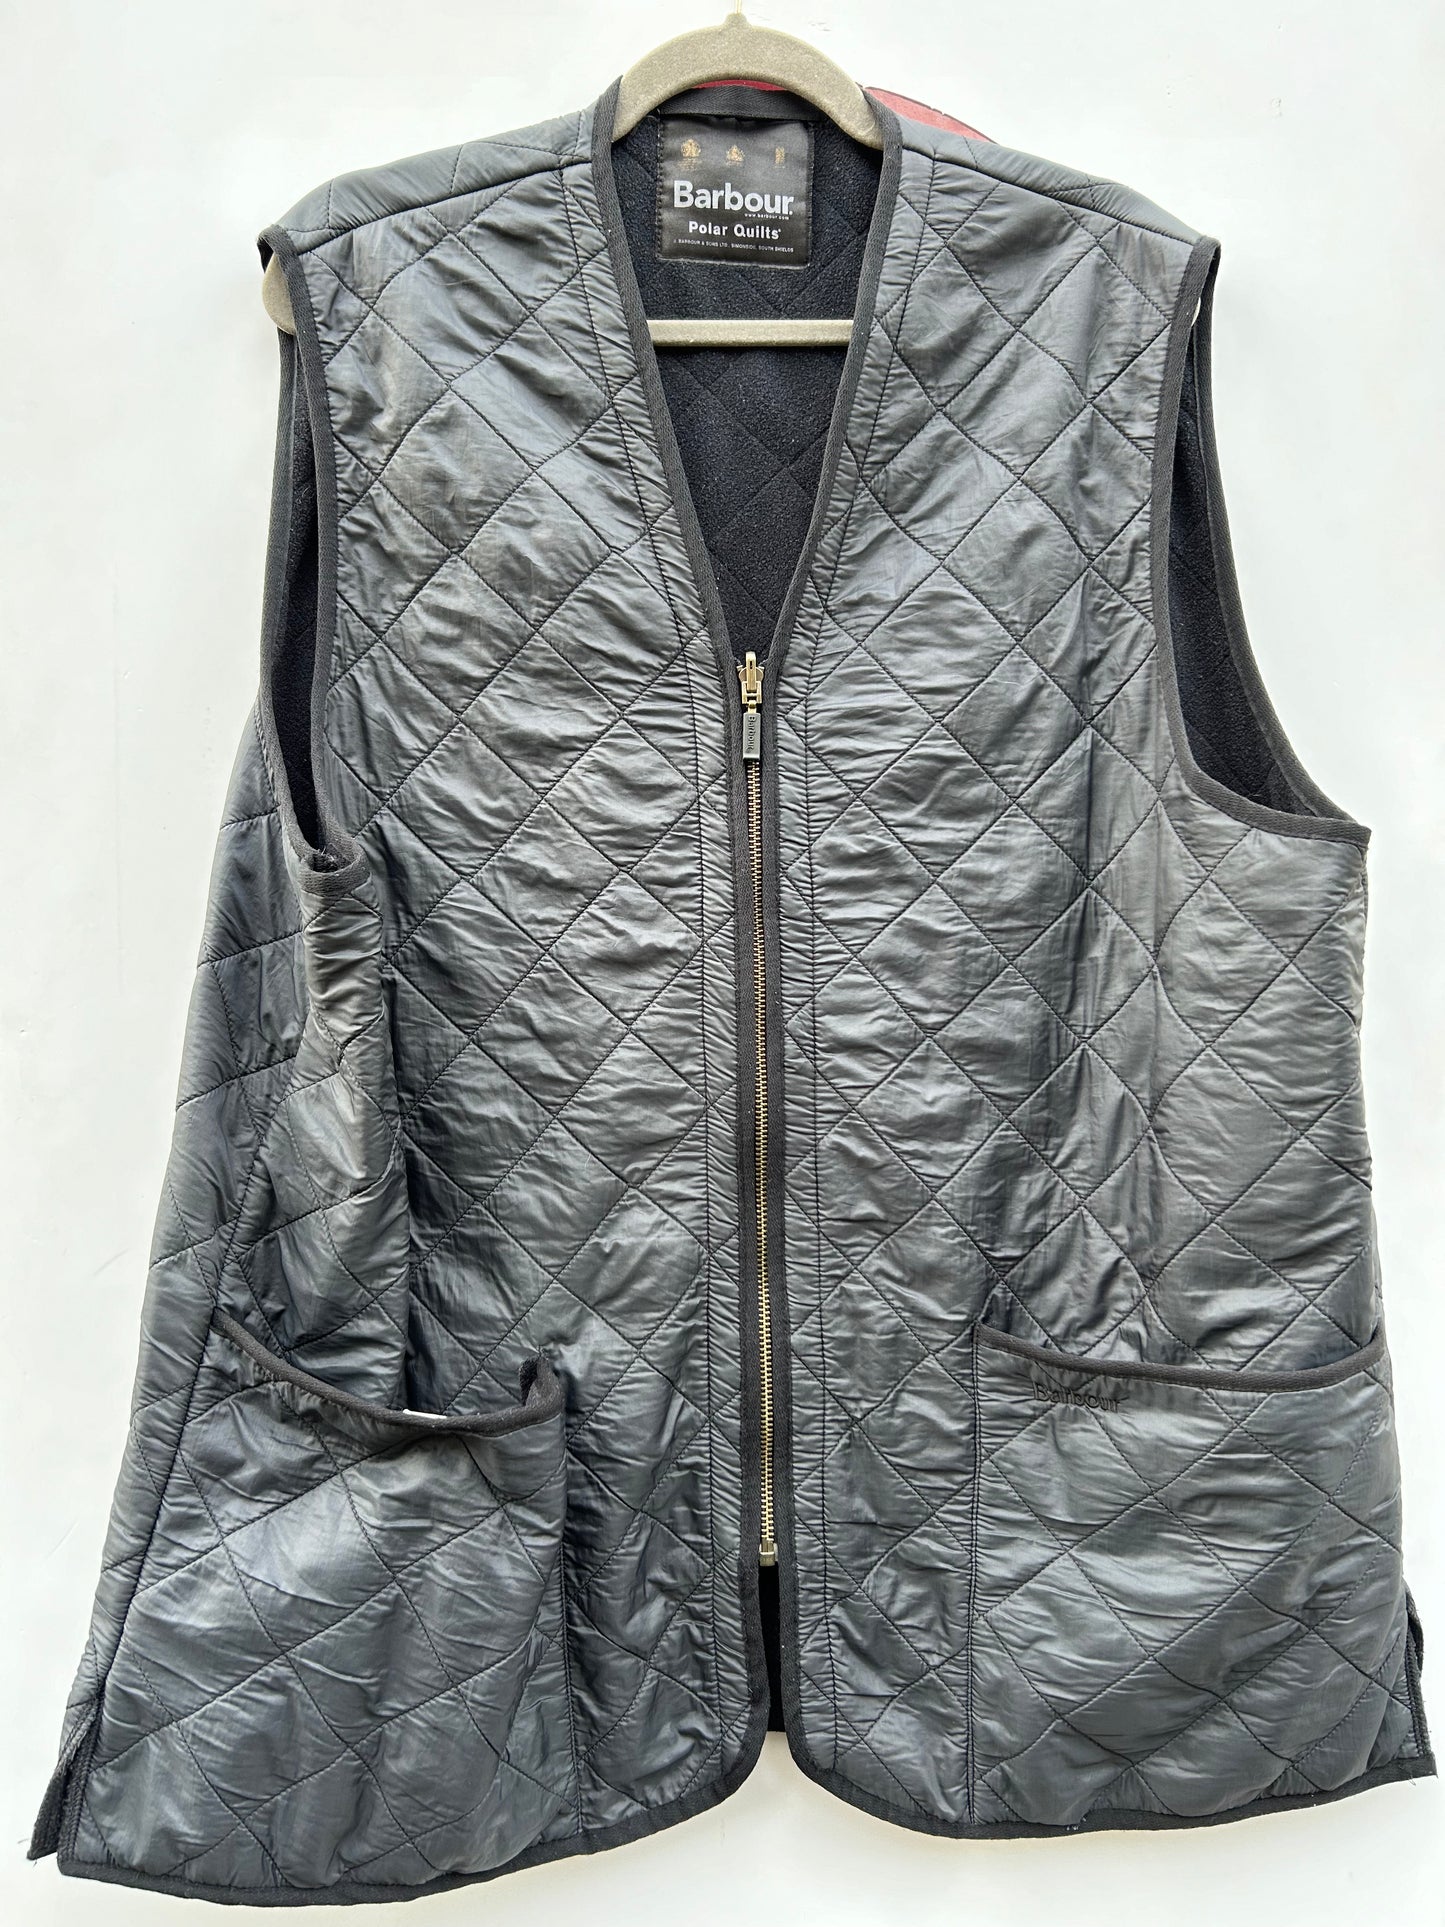 Gilet Barbour Polarquilt con pile nero XL black Polarquilt Waistcoat zip in liner XL